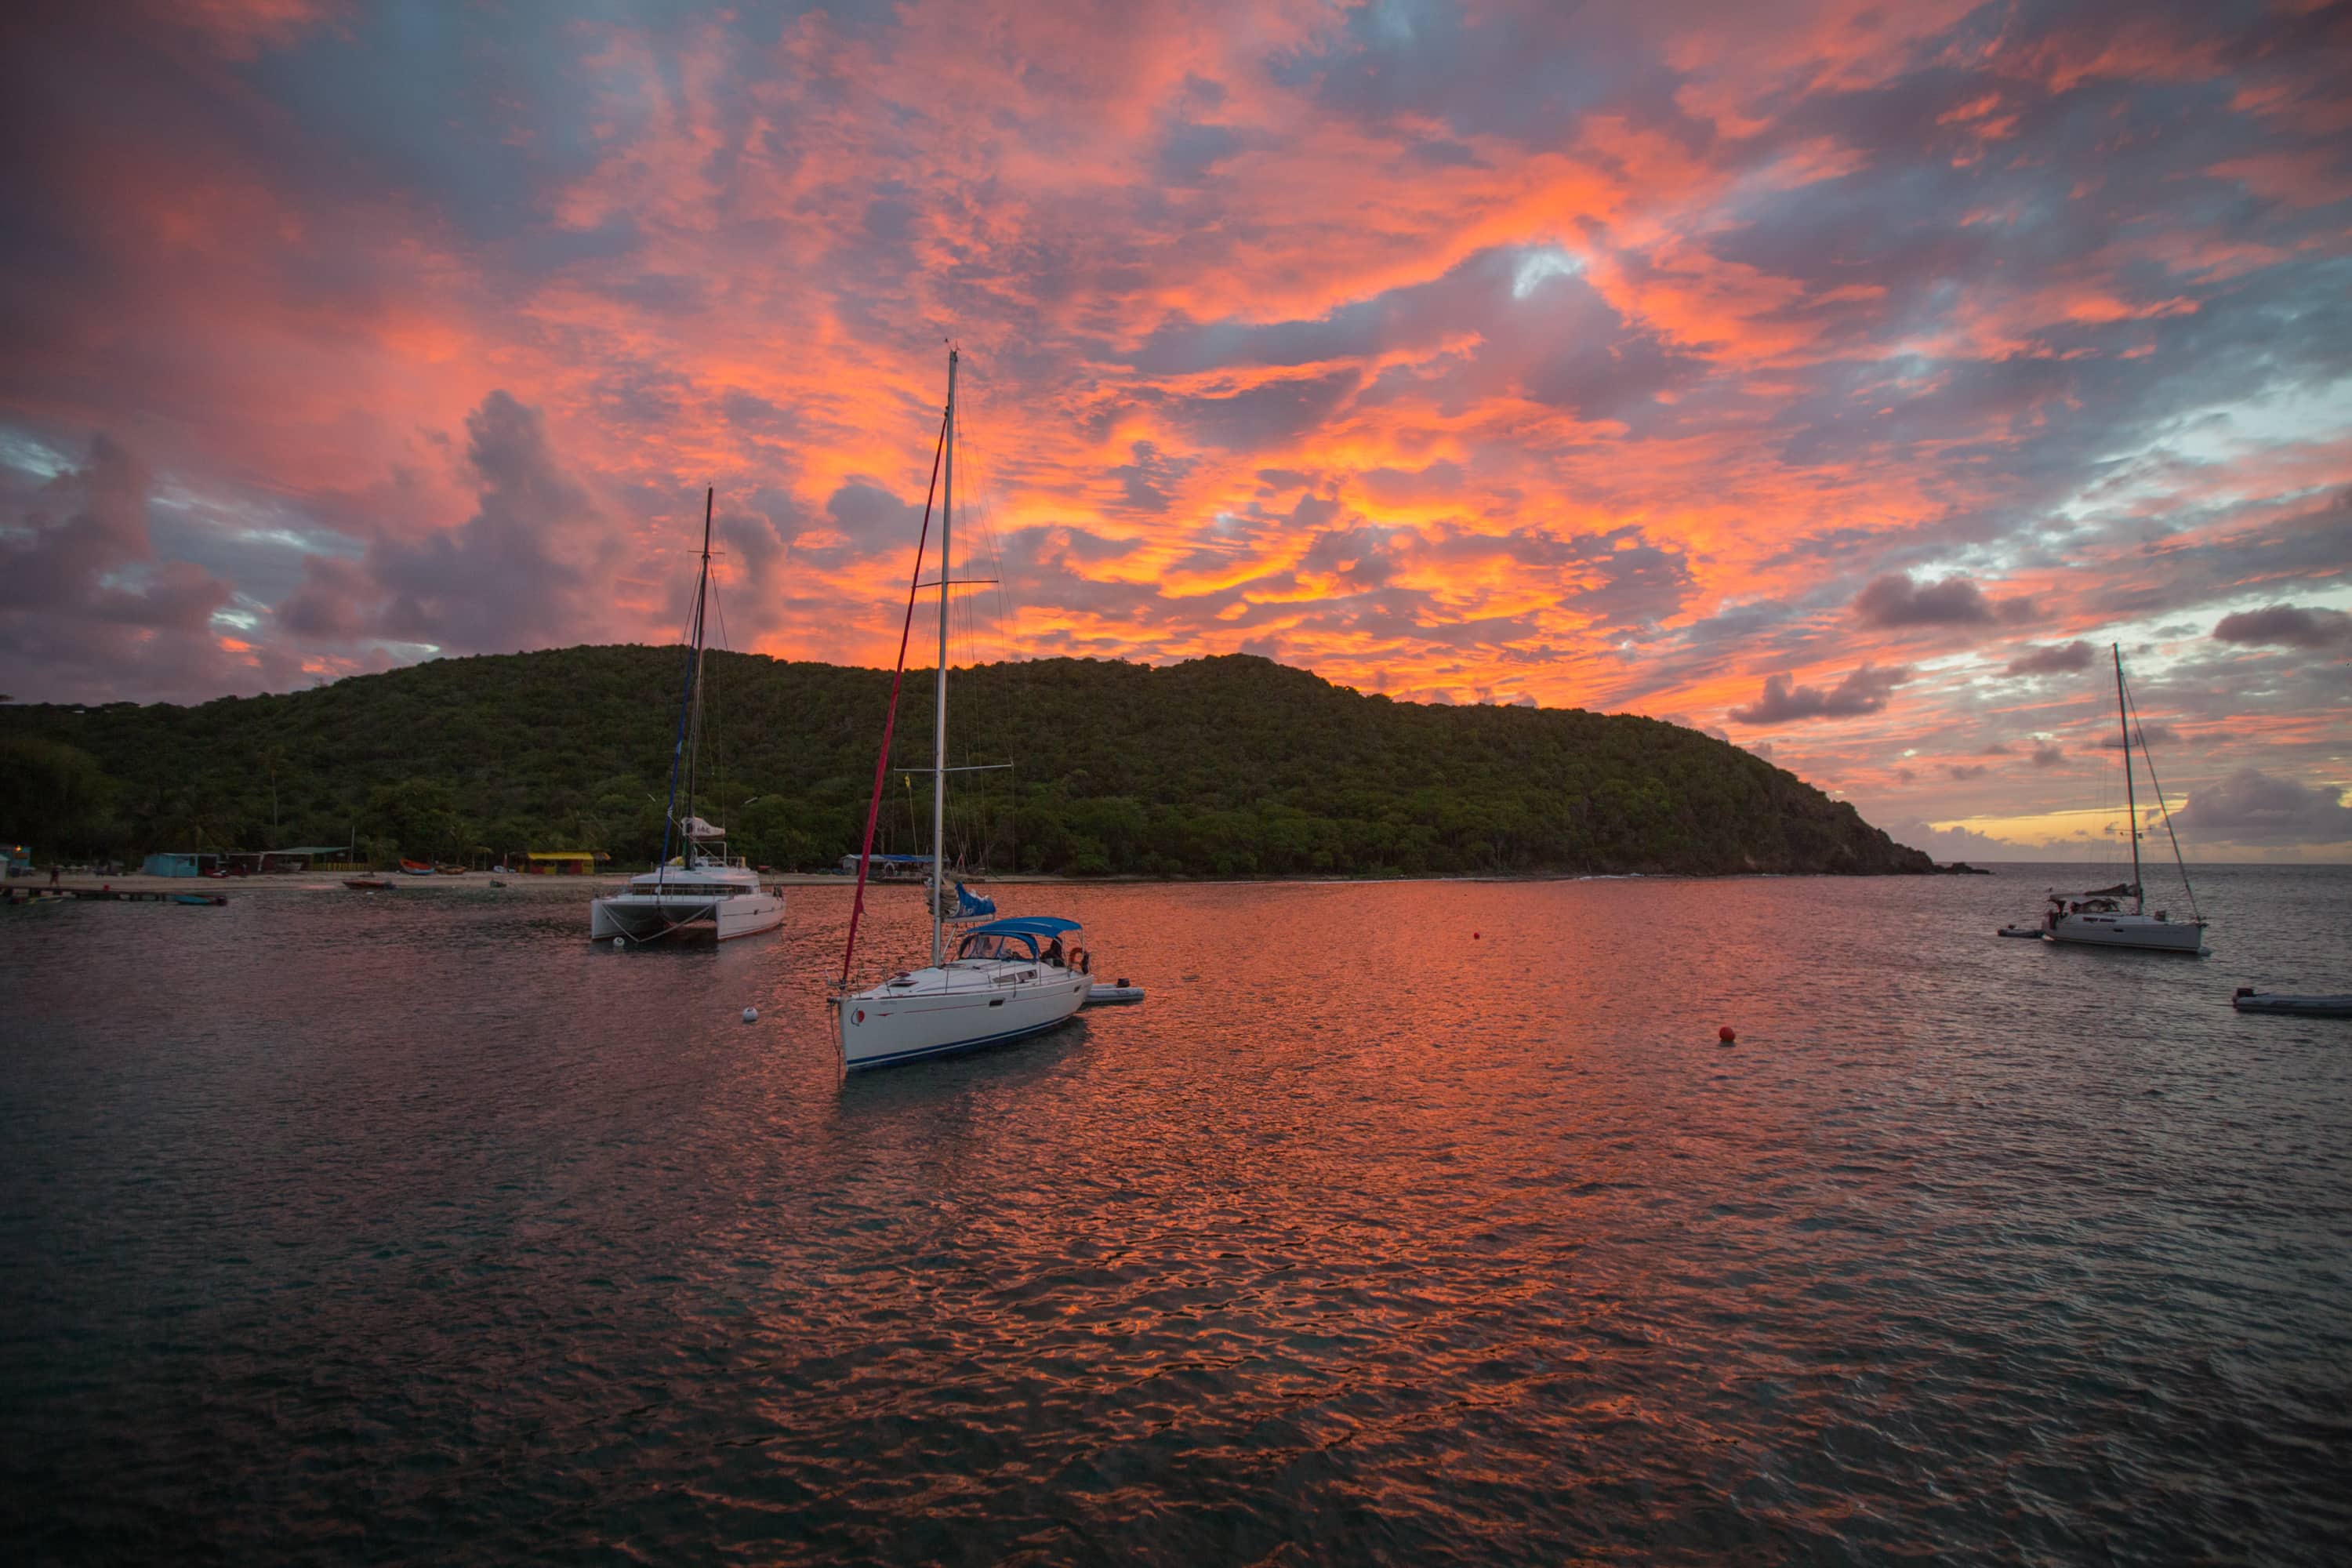 Salt Whistle Bay, Mayreau, The Grenadines | Photo credit: Flickr user Christian Lendl